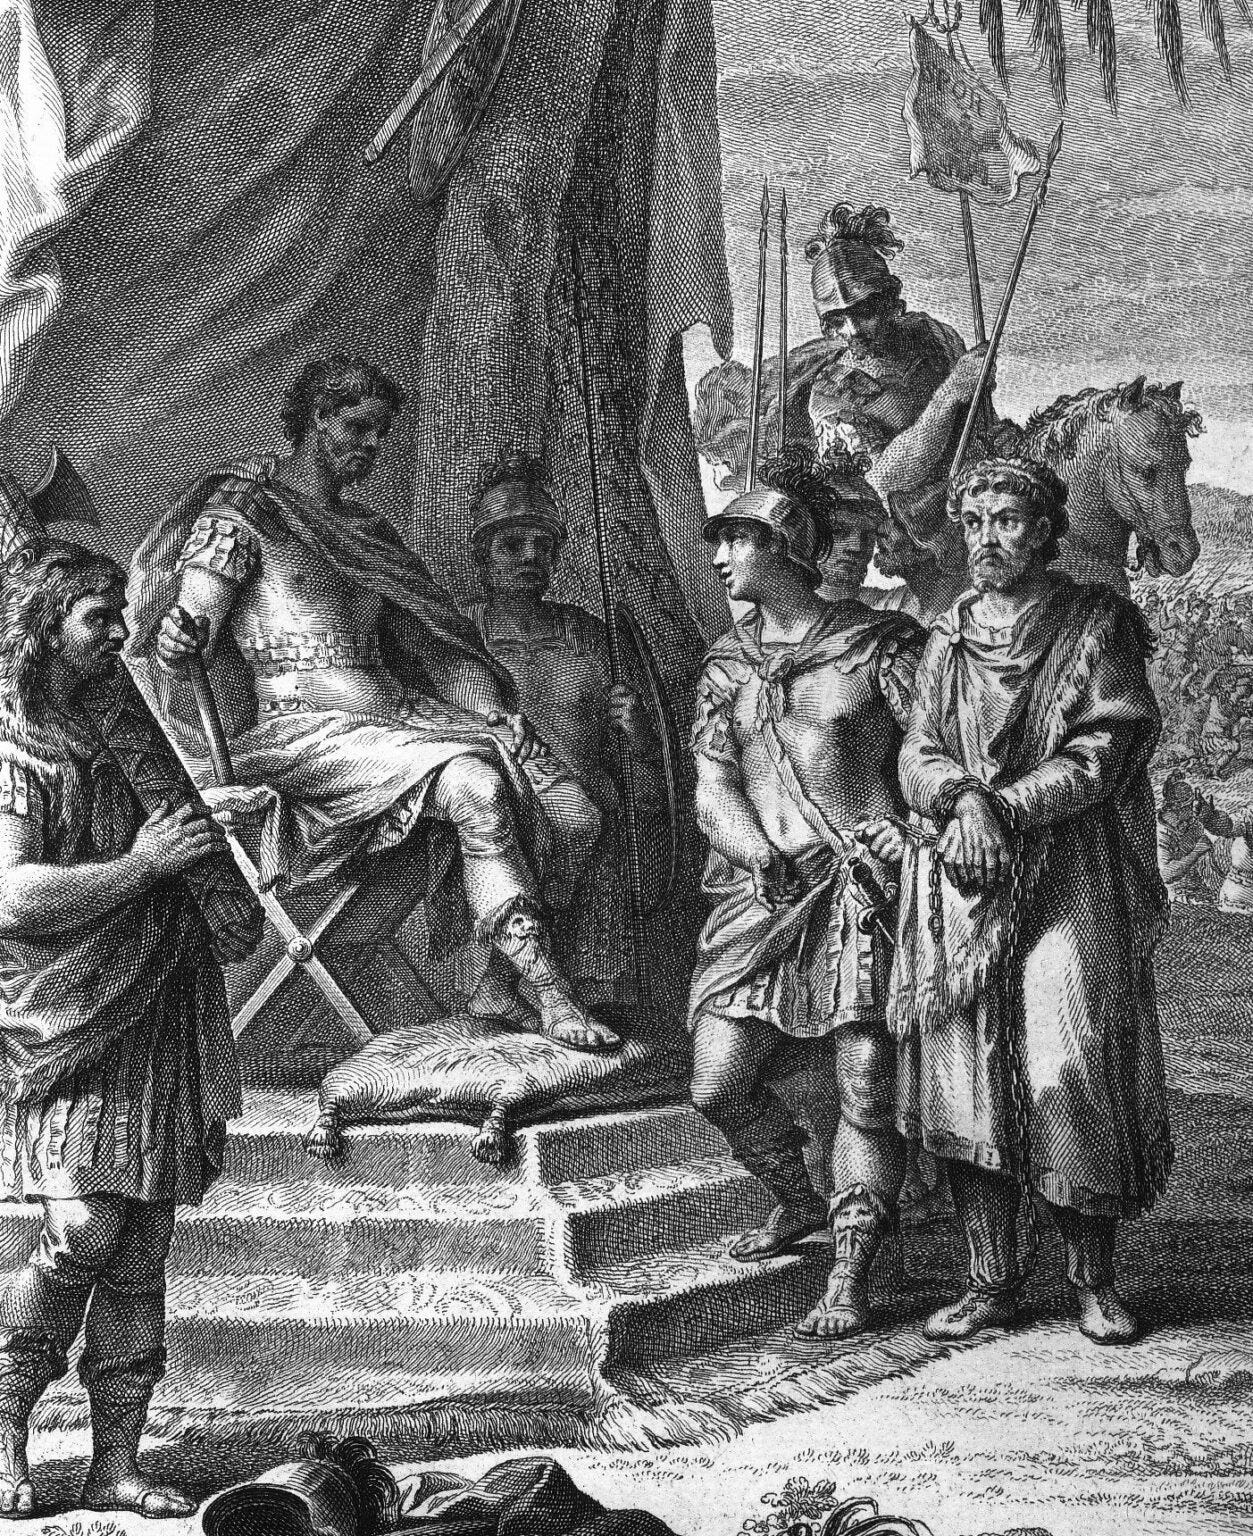 Jugurtha: Numidian King, Roman Enemy - Warfare History Network